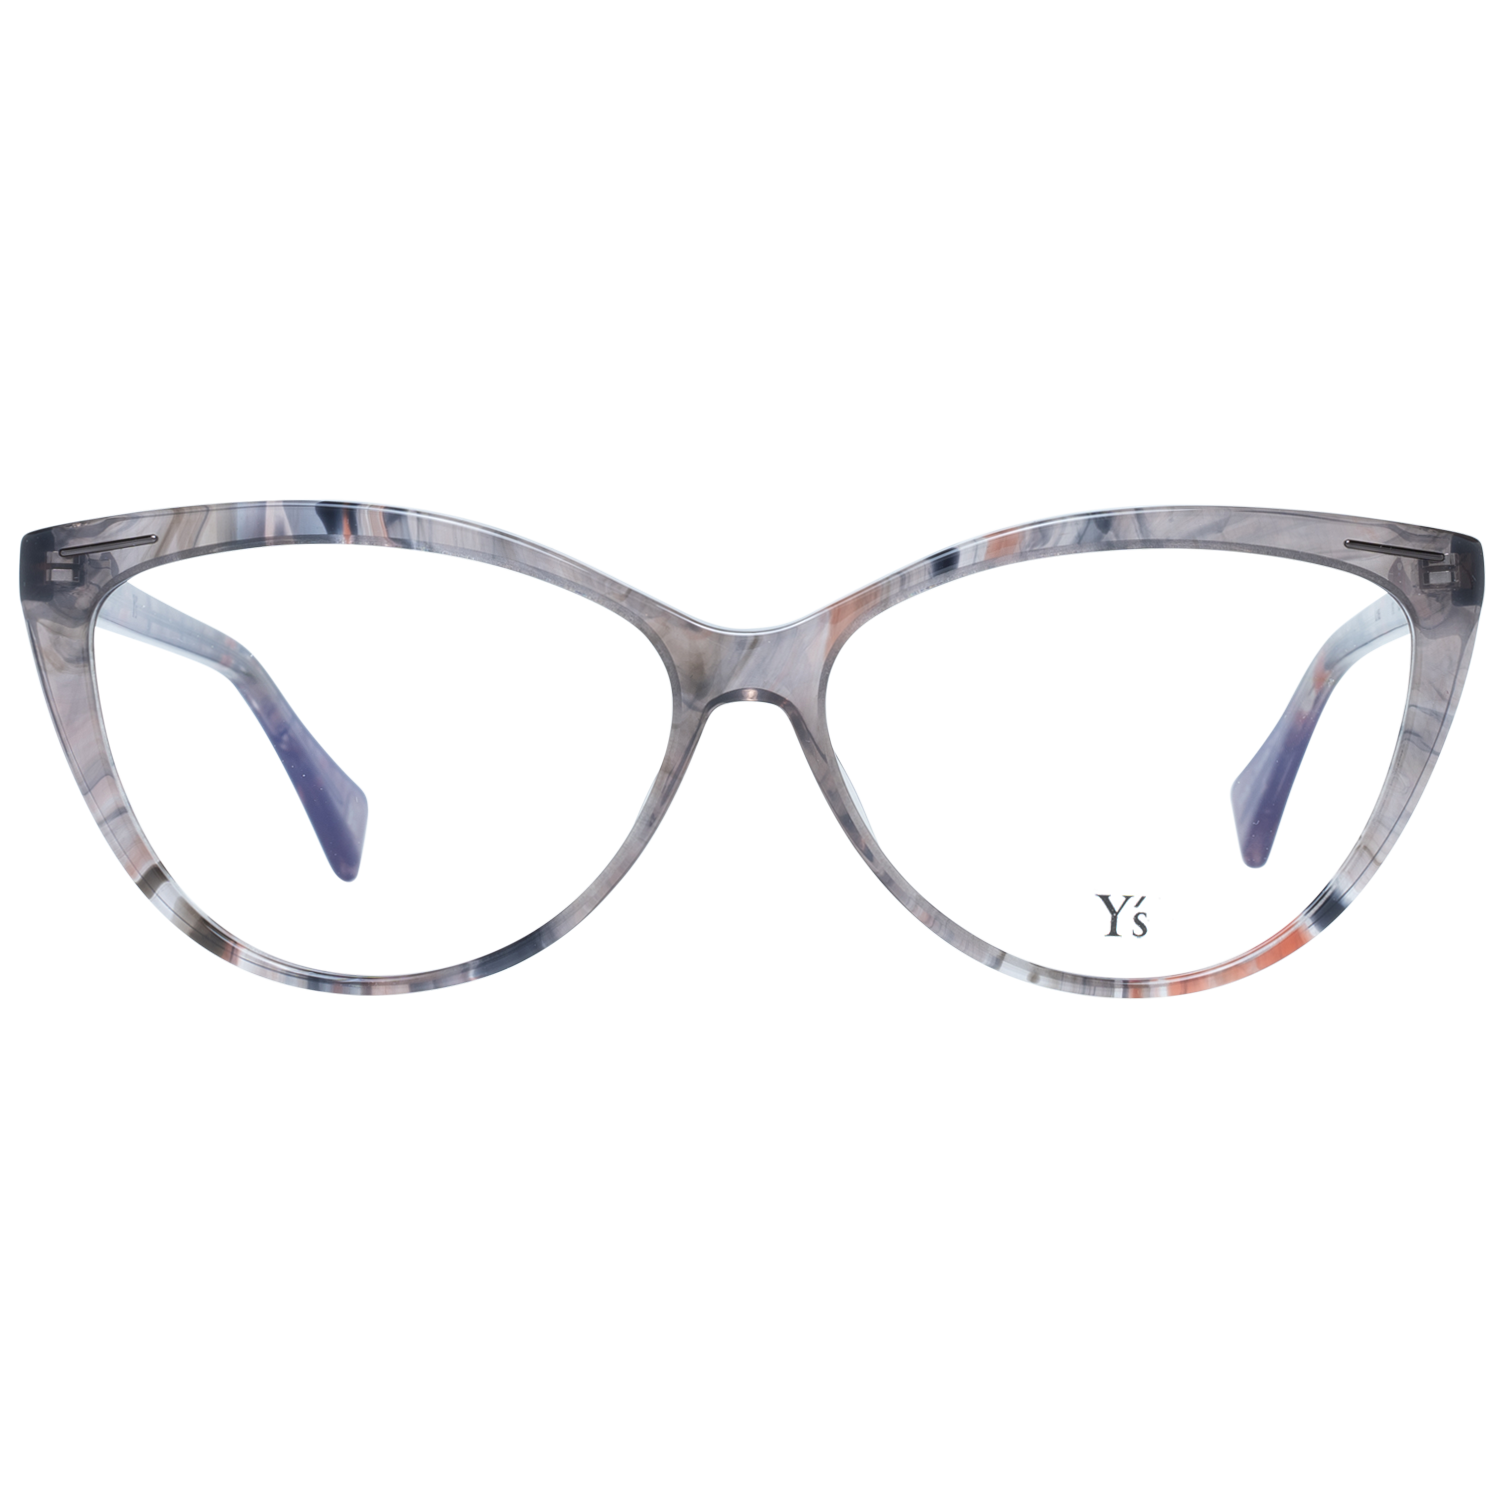 Yohji Yamamoto Frames Yohji Yamamoto Optical Frame YS1001 941 58 Eyeglasses Eyewear UK USA Australia 